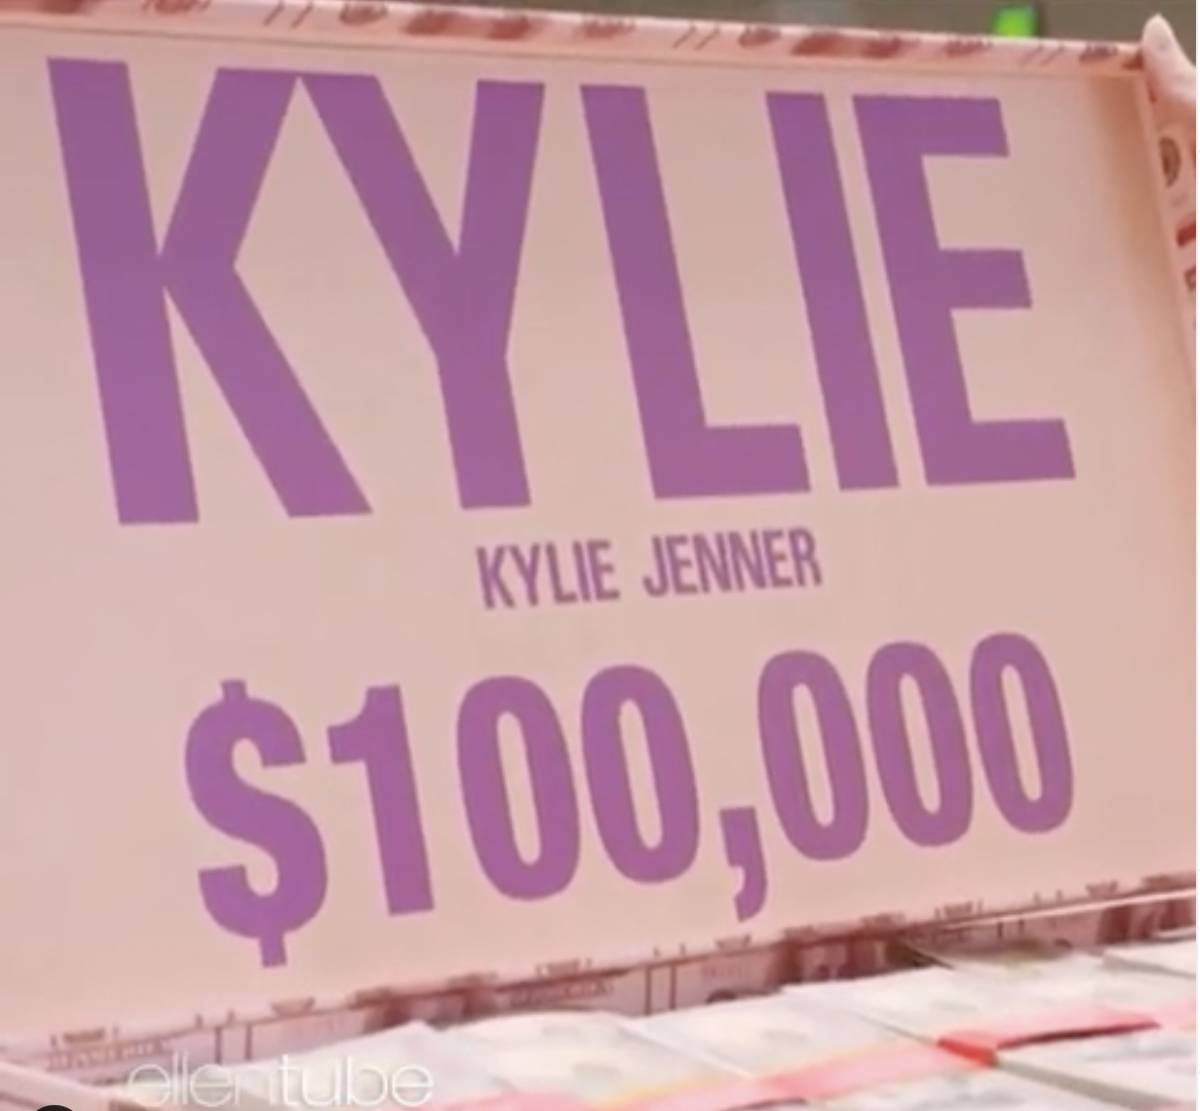 Kylie Jenner regala 200 mila dollari ad una studentessa in difficoltà